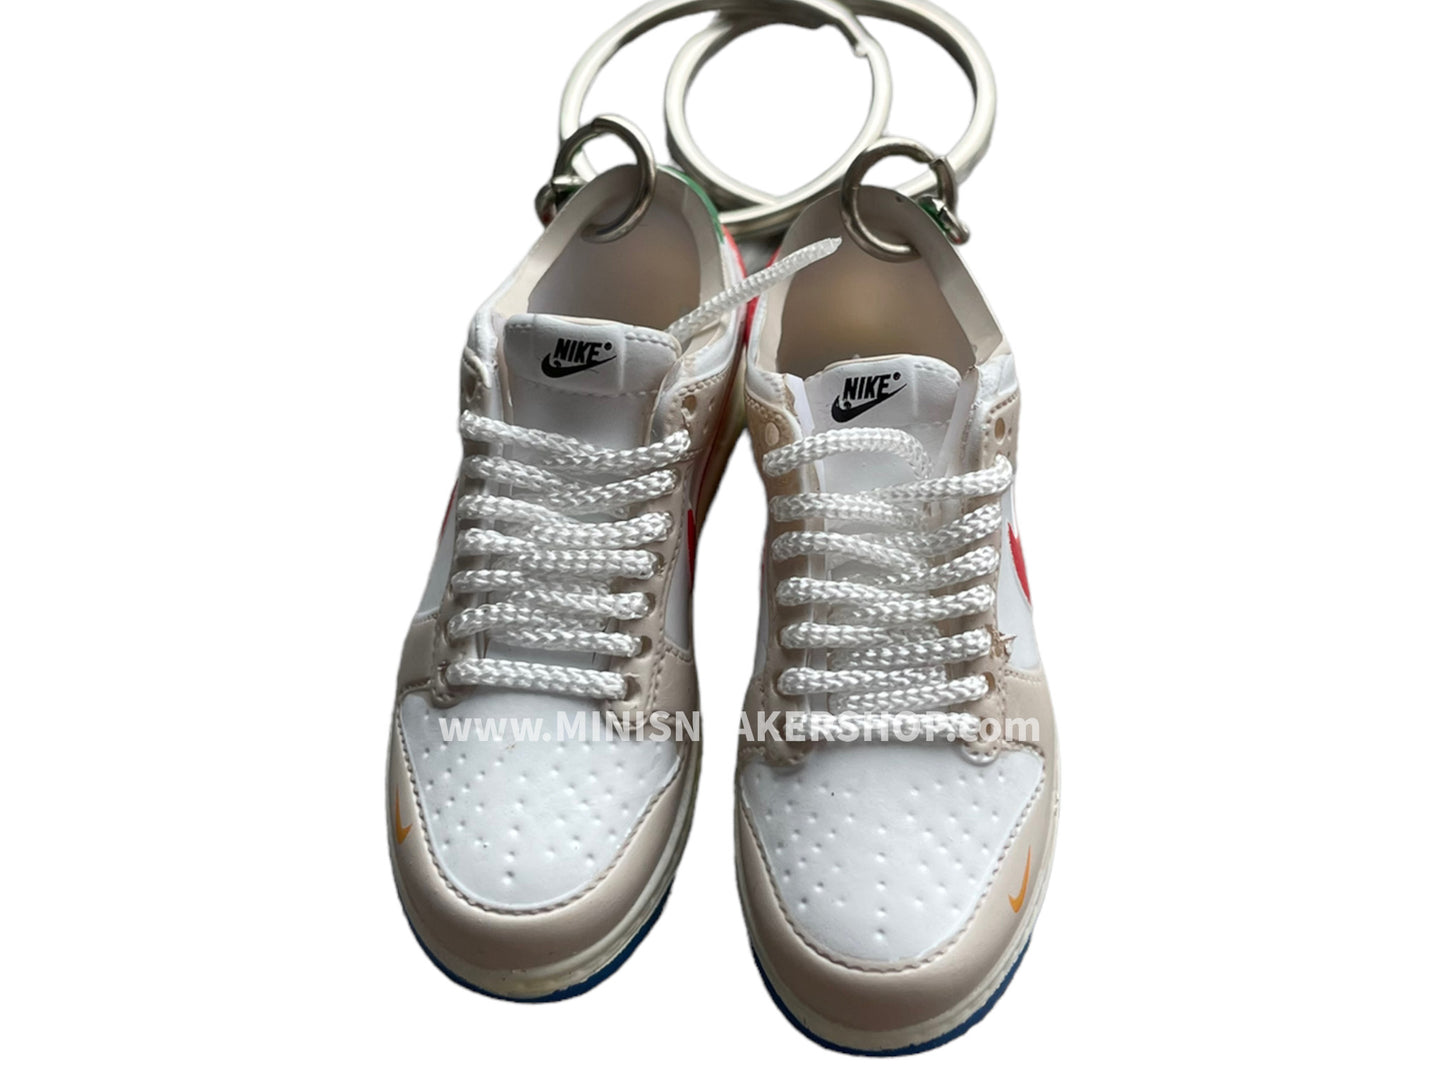 Mini sneaker keychain 3D Dunk - Grey Red